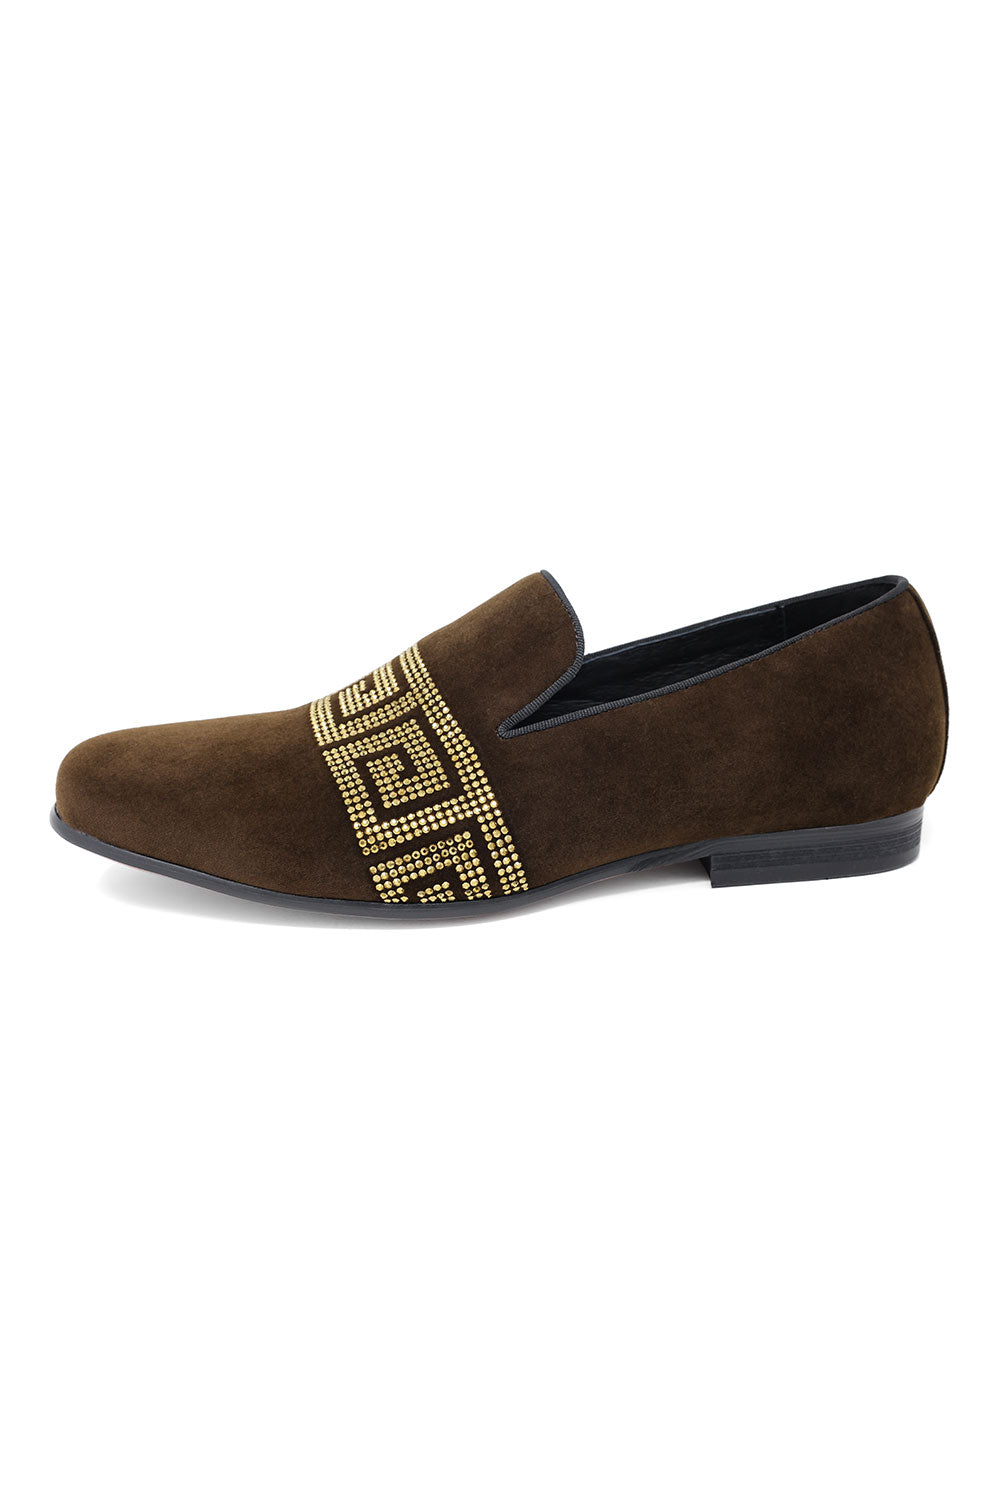 BARABAS Men's Rhinestone Greek key Pattern Slip On Dress Shoes SH3067 Brown Gold